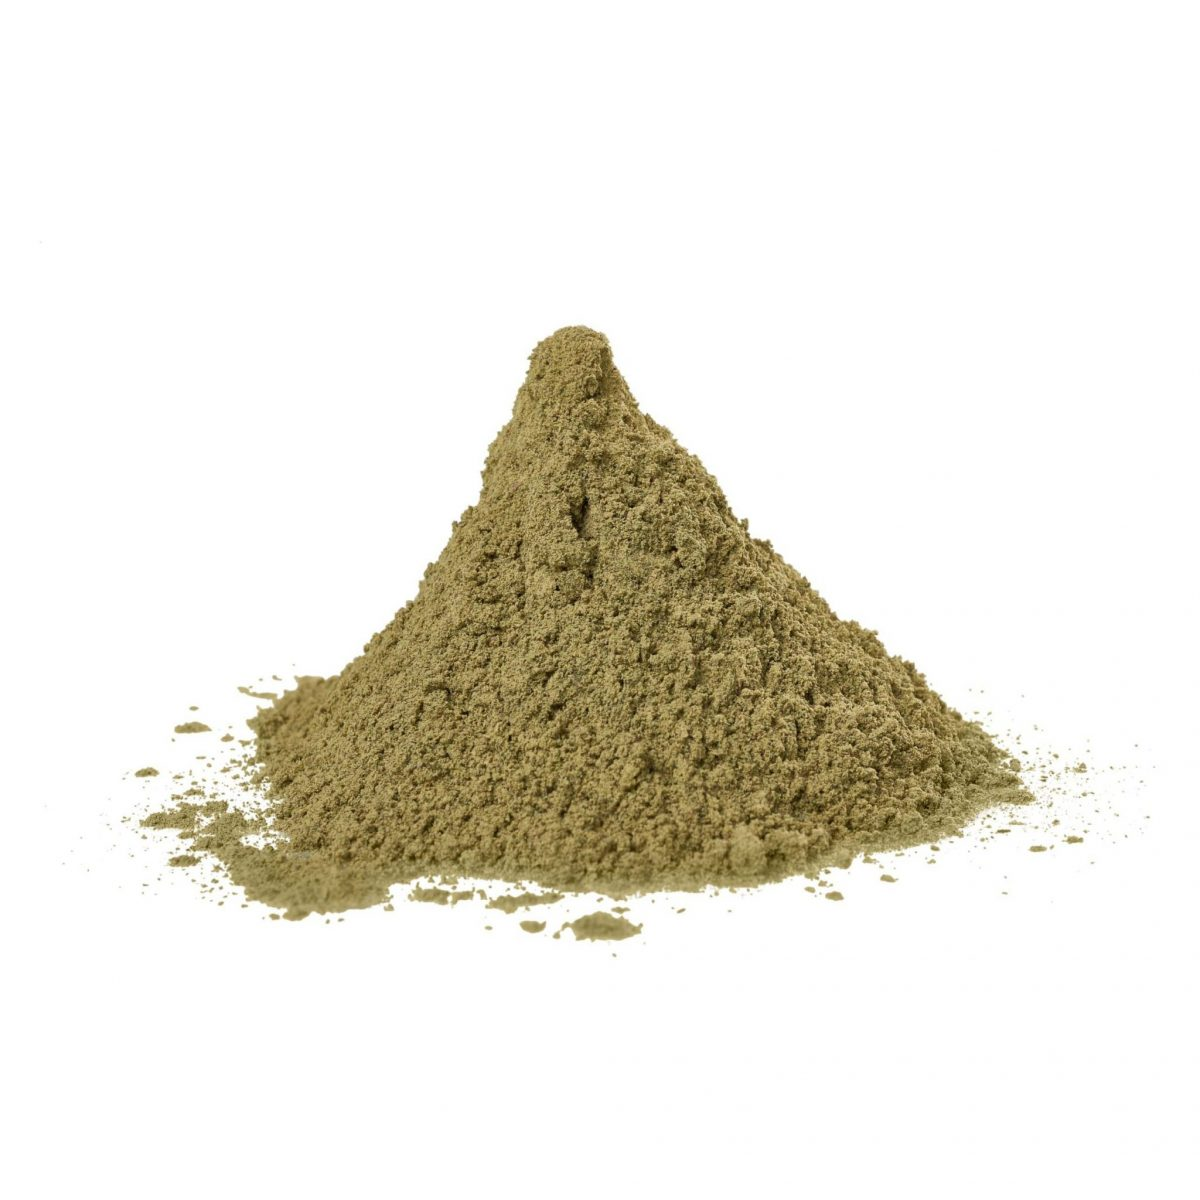 Key Things You Should Consider Before Smoking Kratom Powder